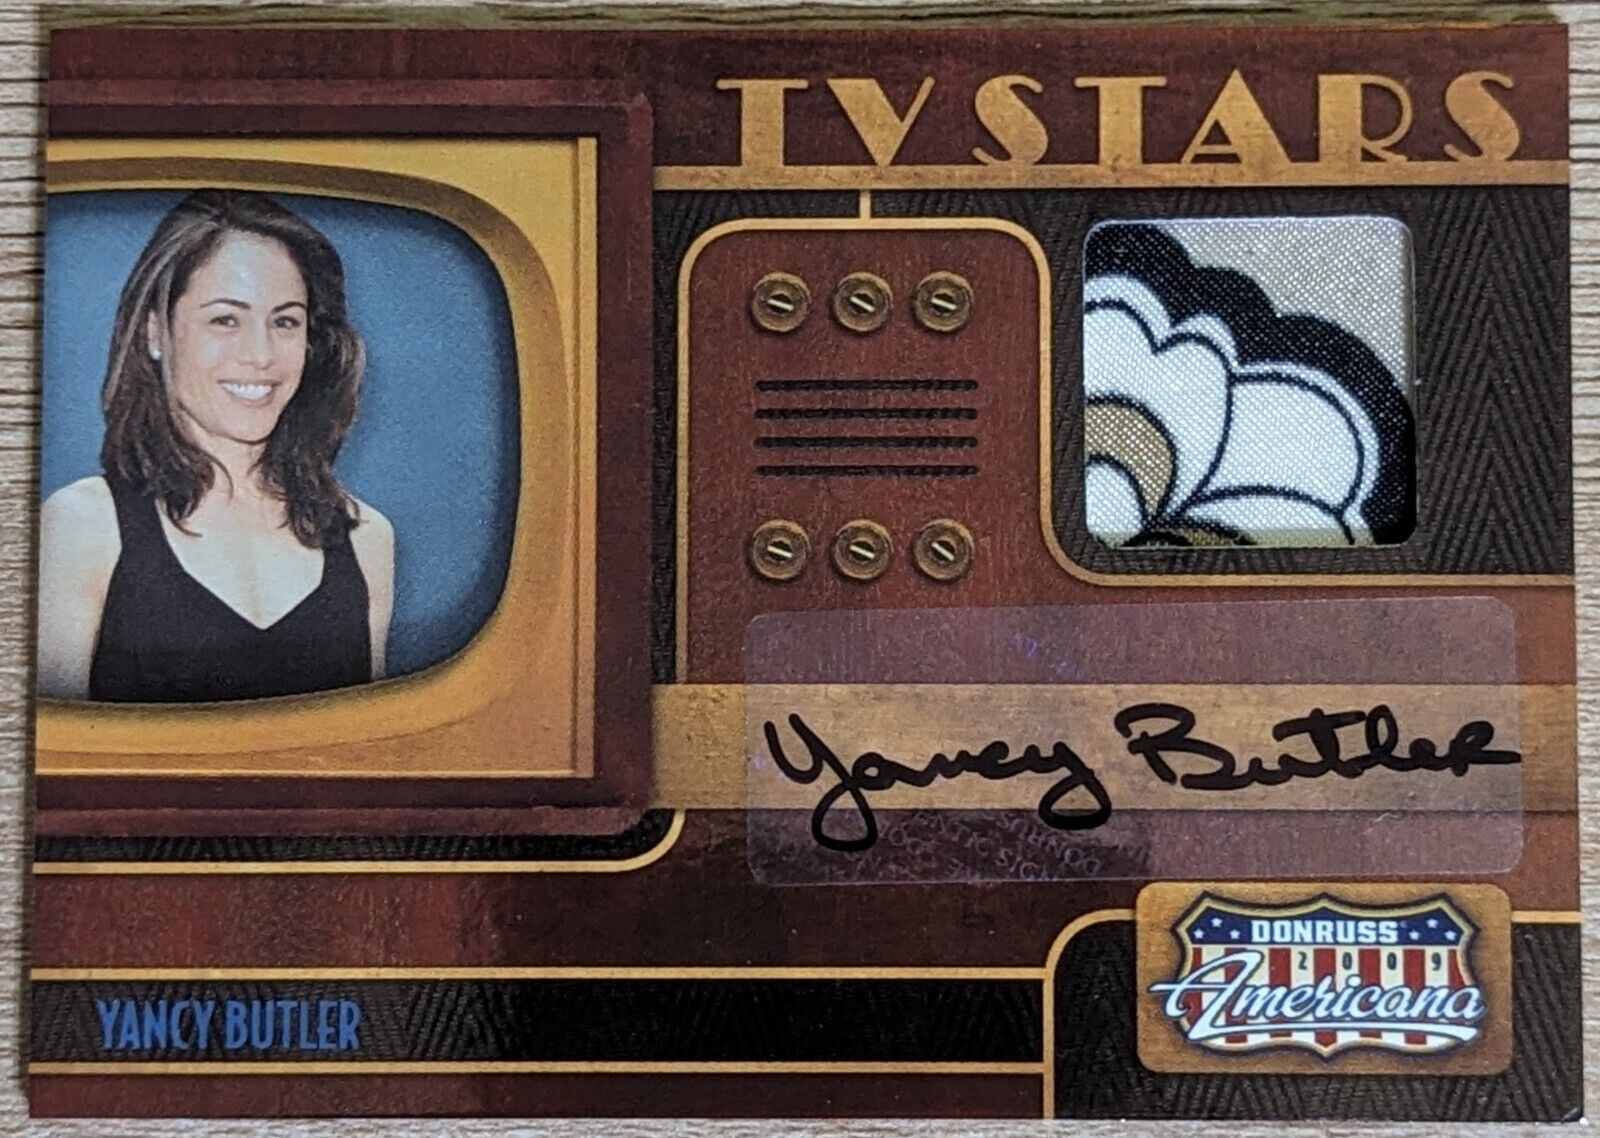 2009 Donruss Americana TV Stars Yancy Butler Autograph Costume Relic Card 07/75